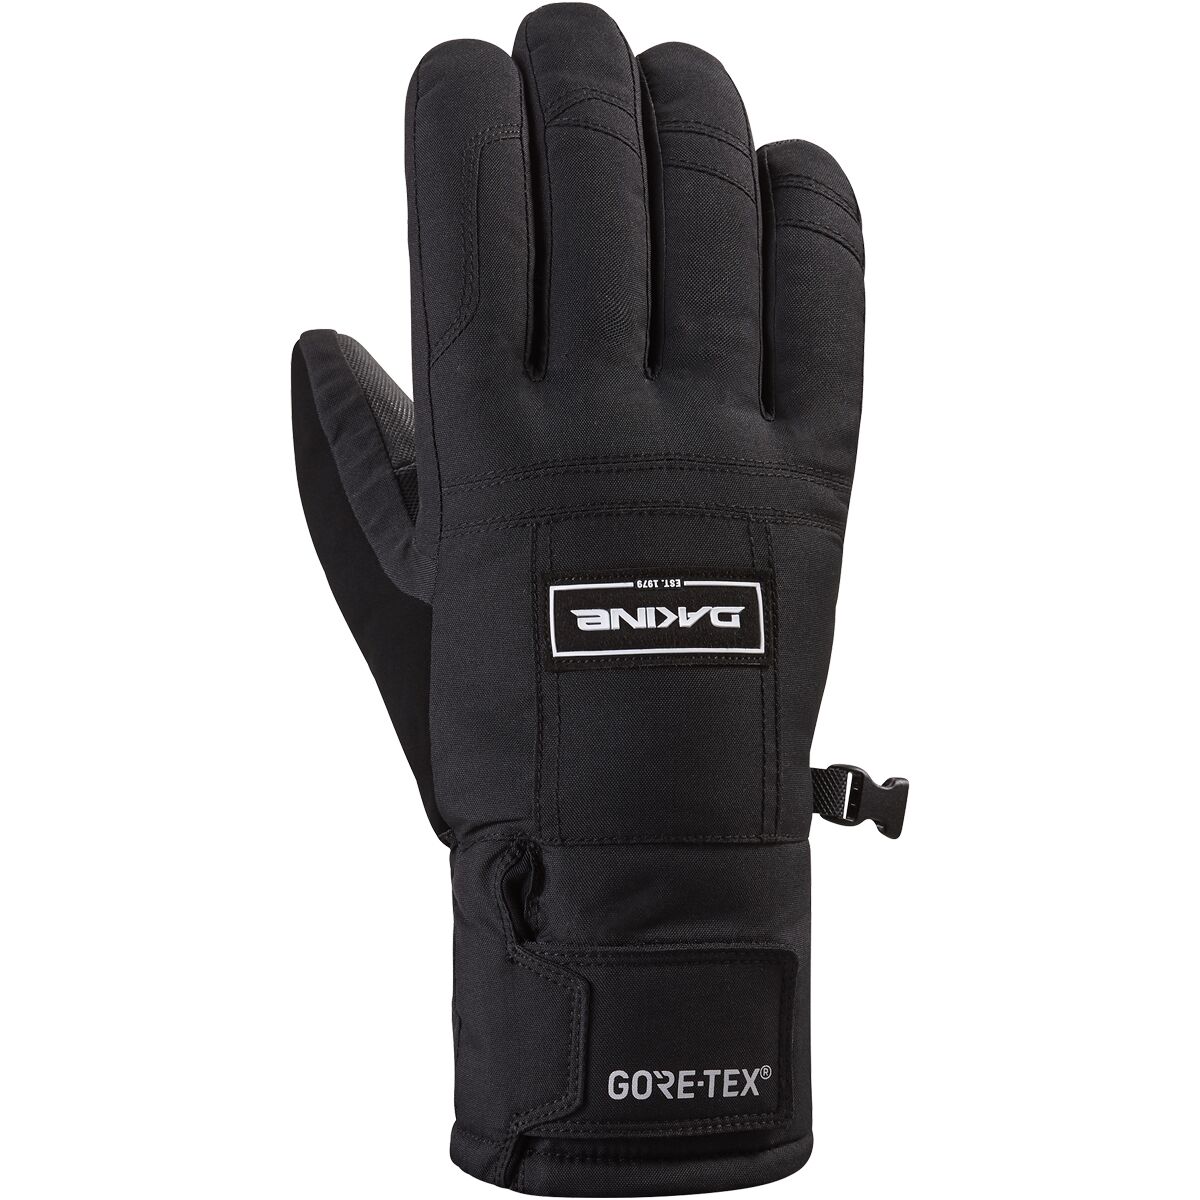 DAKINE Bronco GORE-TEX Glove - Men's